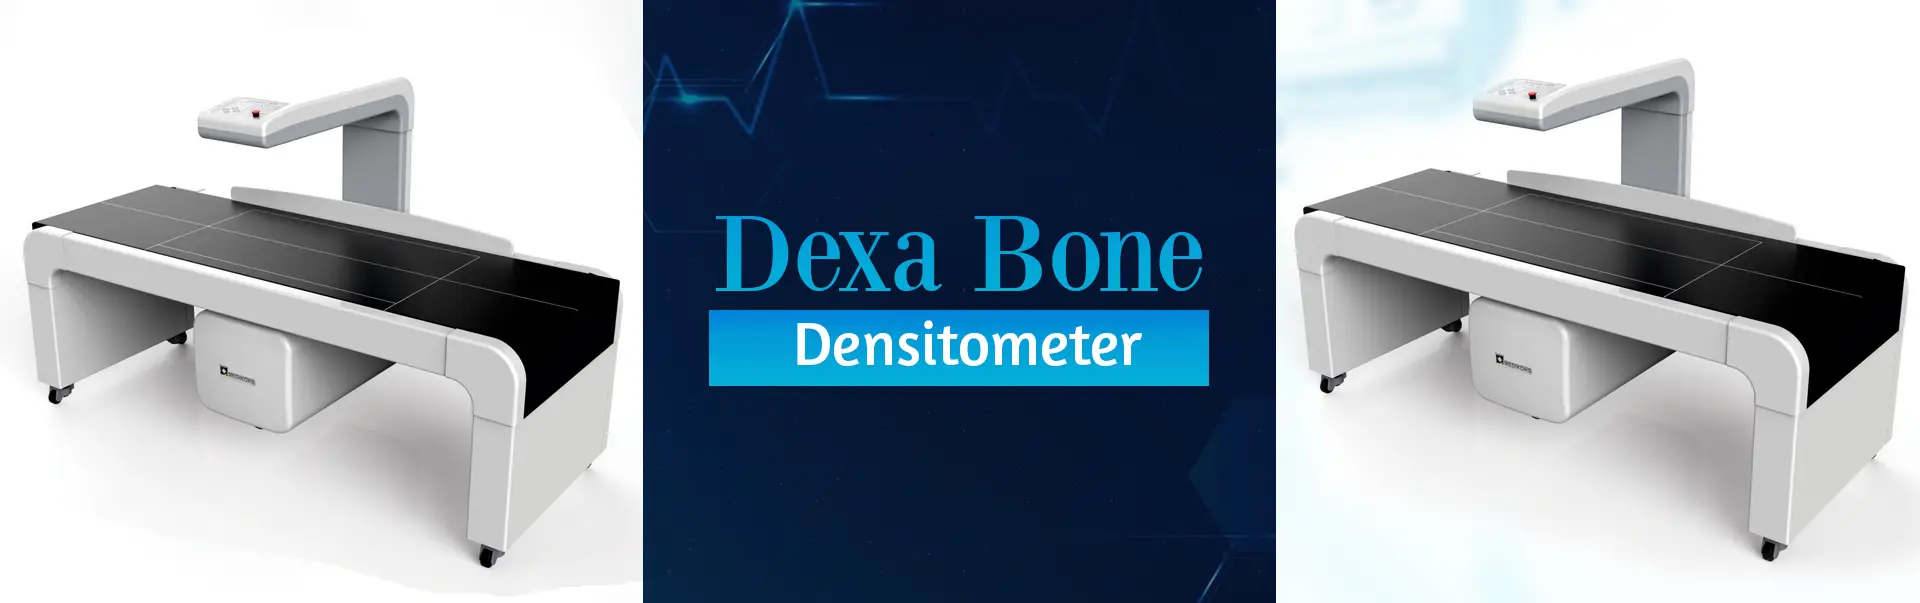 Dexa Bone Densitometer Manufacturers in Thane